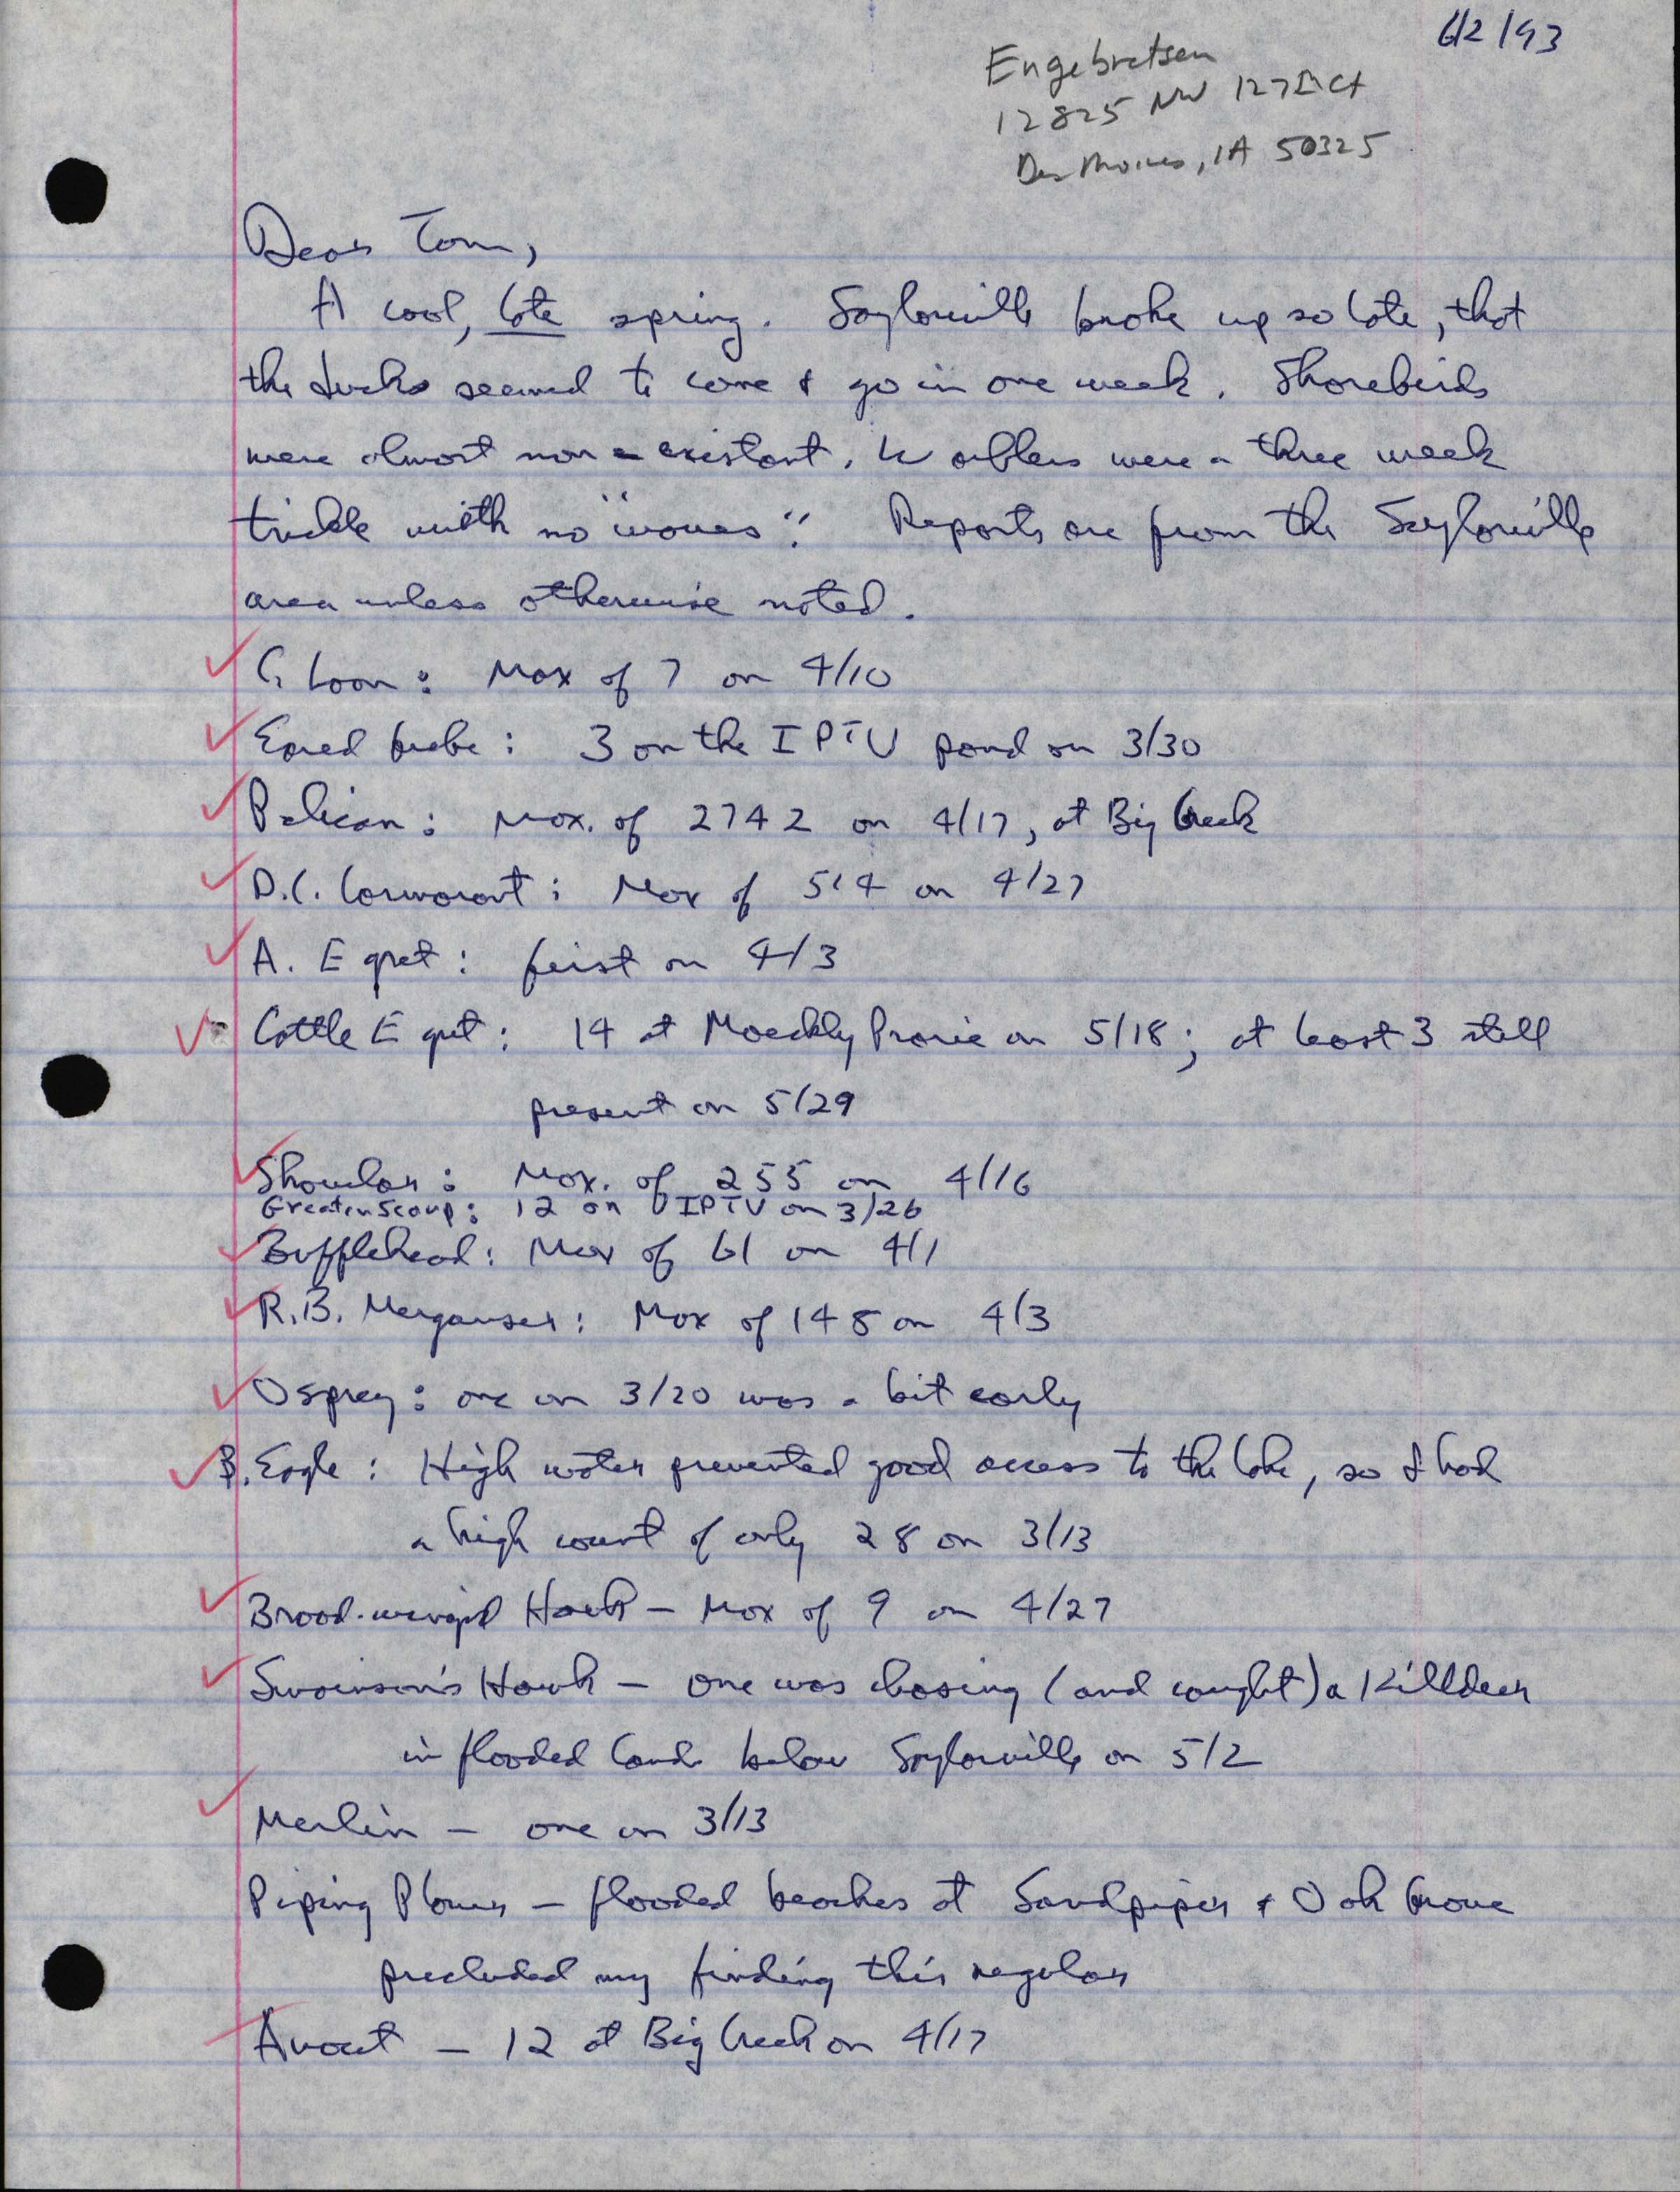 Bery Engebretsen letter to Thomas Kent regarding spring reports, June 2, 1993